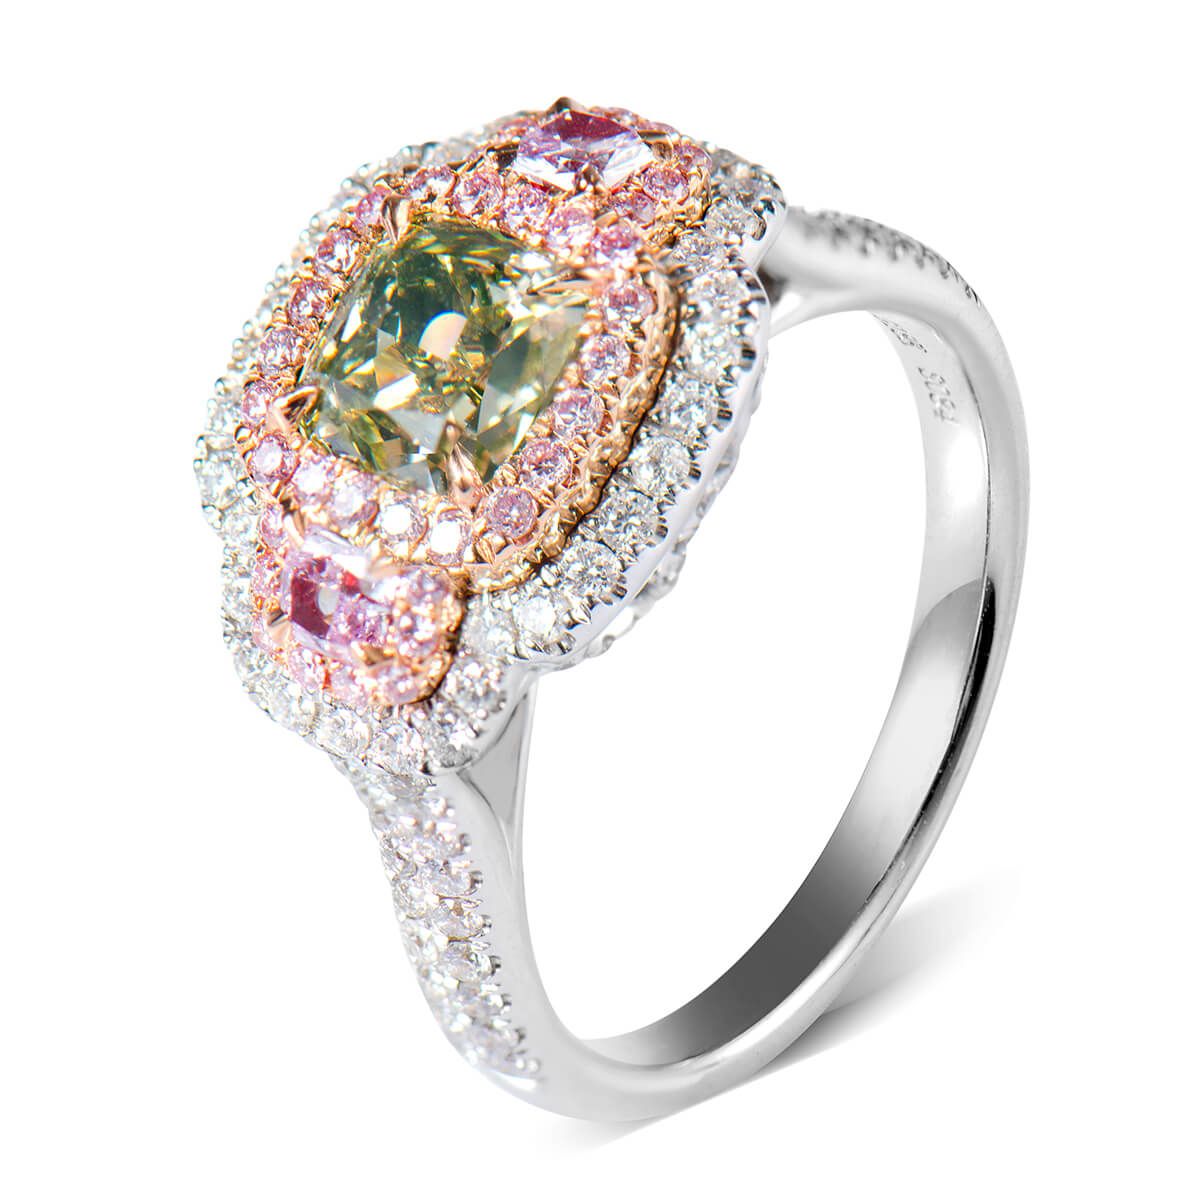 Fancy Grayish Greenish Yellow Diamond Ring, 1.93 Ct. TW, Cushion shape, GIA Certified, 2156011579